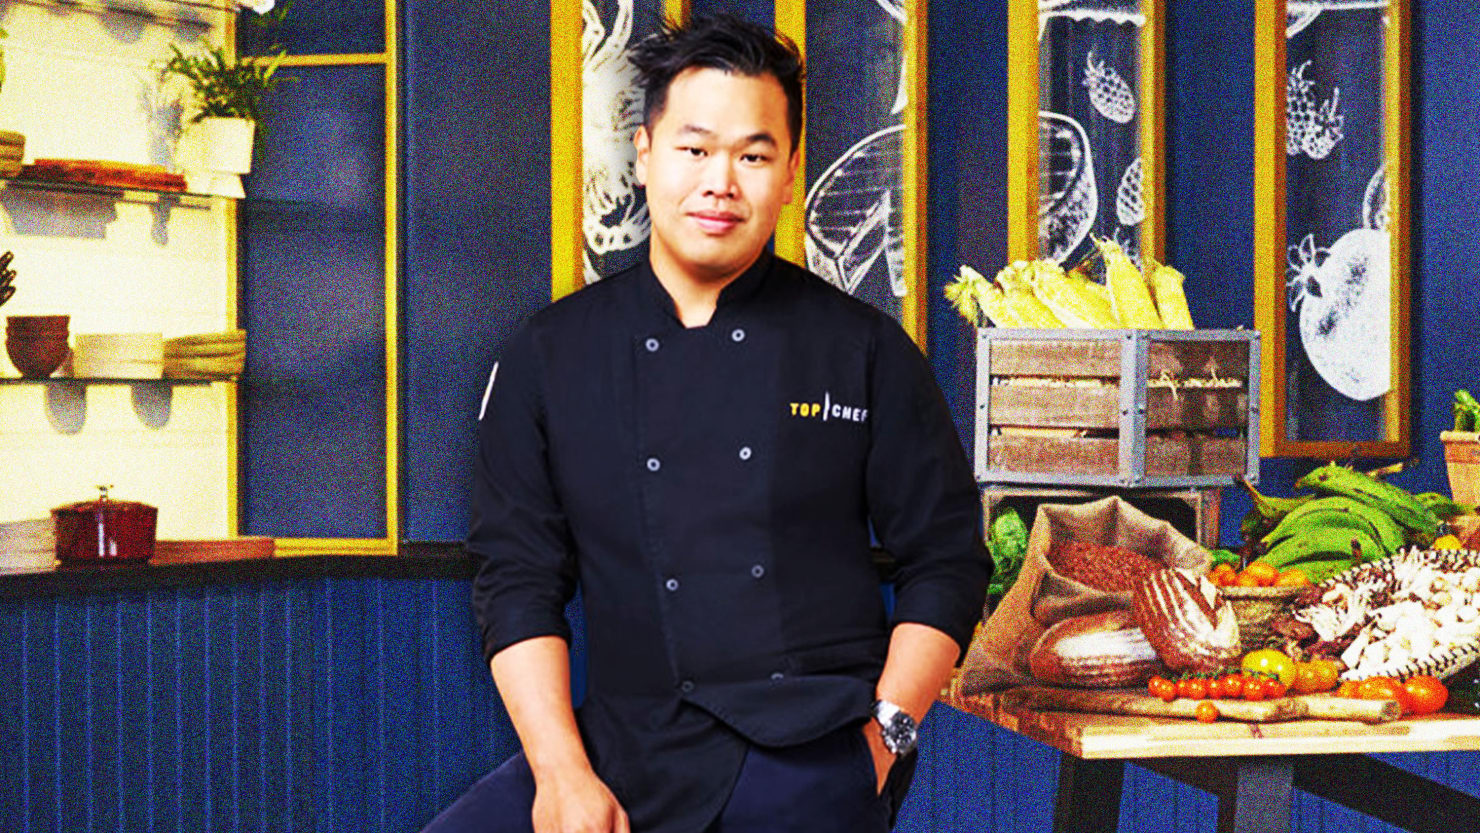 ‘Top Chef’ Winner Buddha Lo on ‘World All-Stars’ Season and Getting Called a ‘Food Snob’